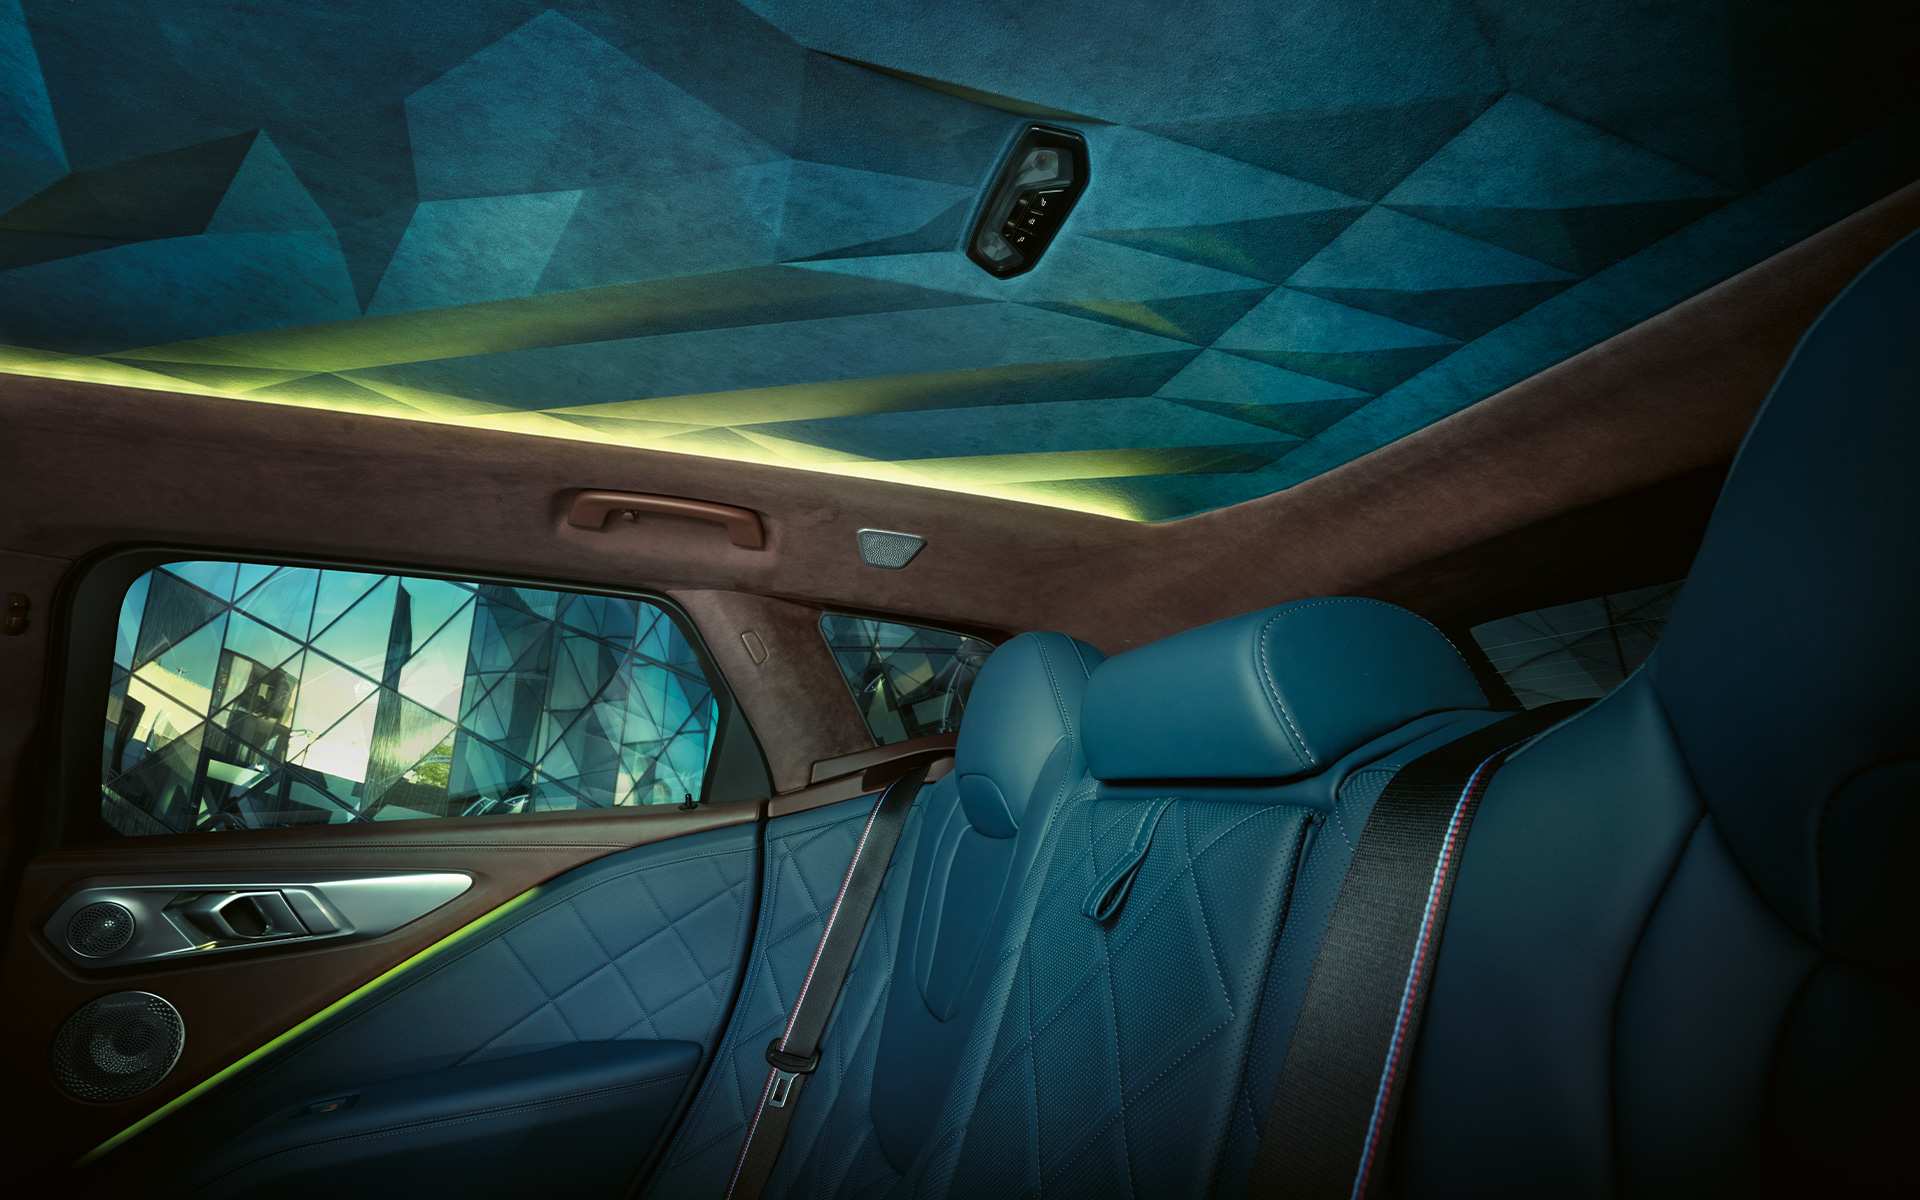 BMW XM Hybrid - M Lounge Seats in Rear